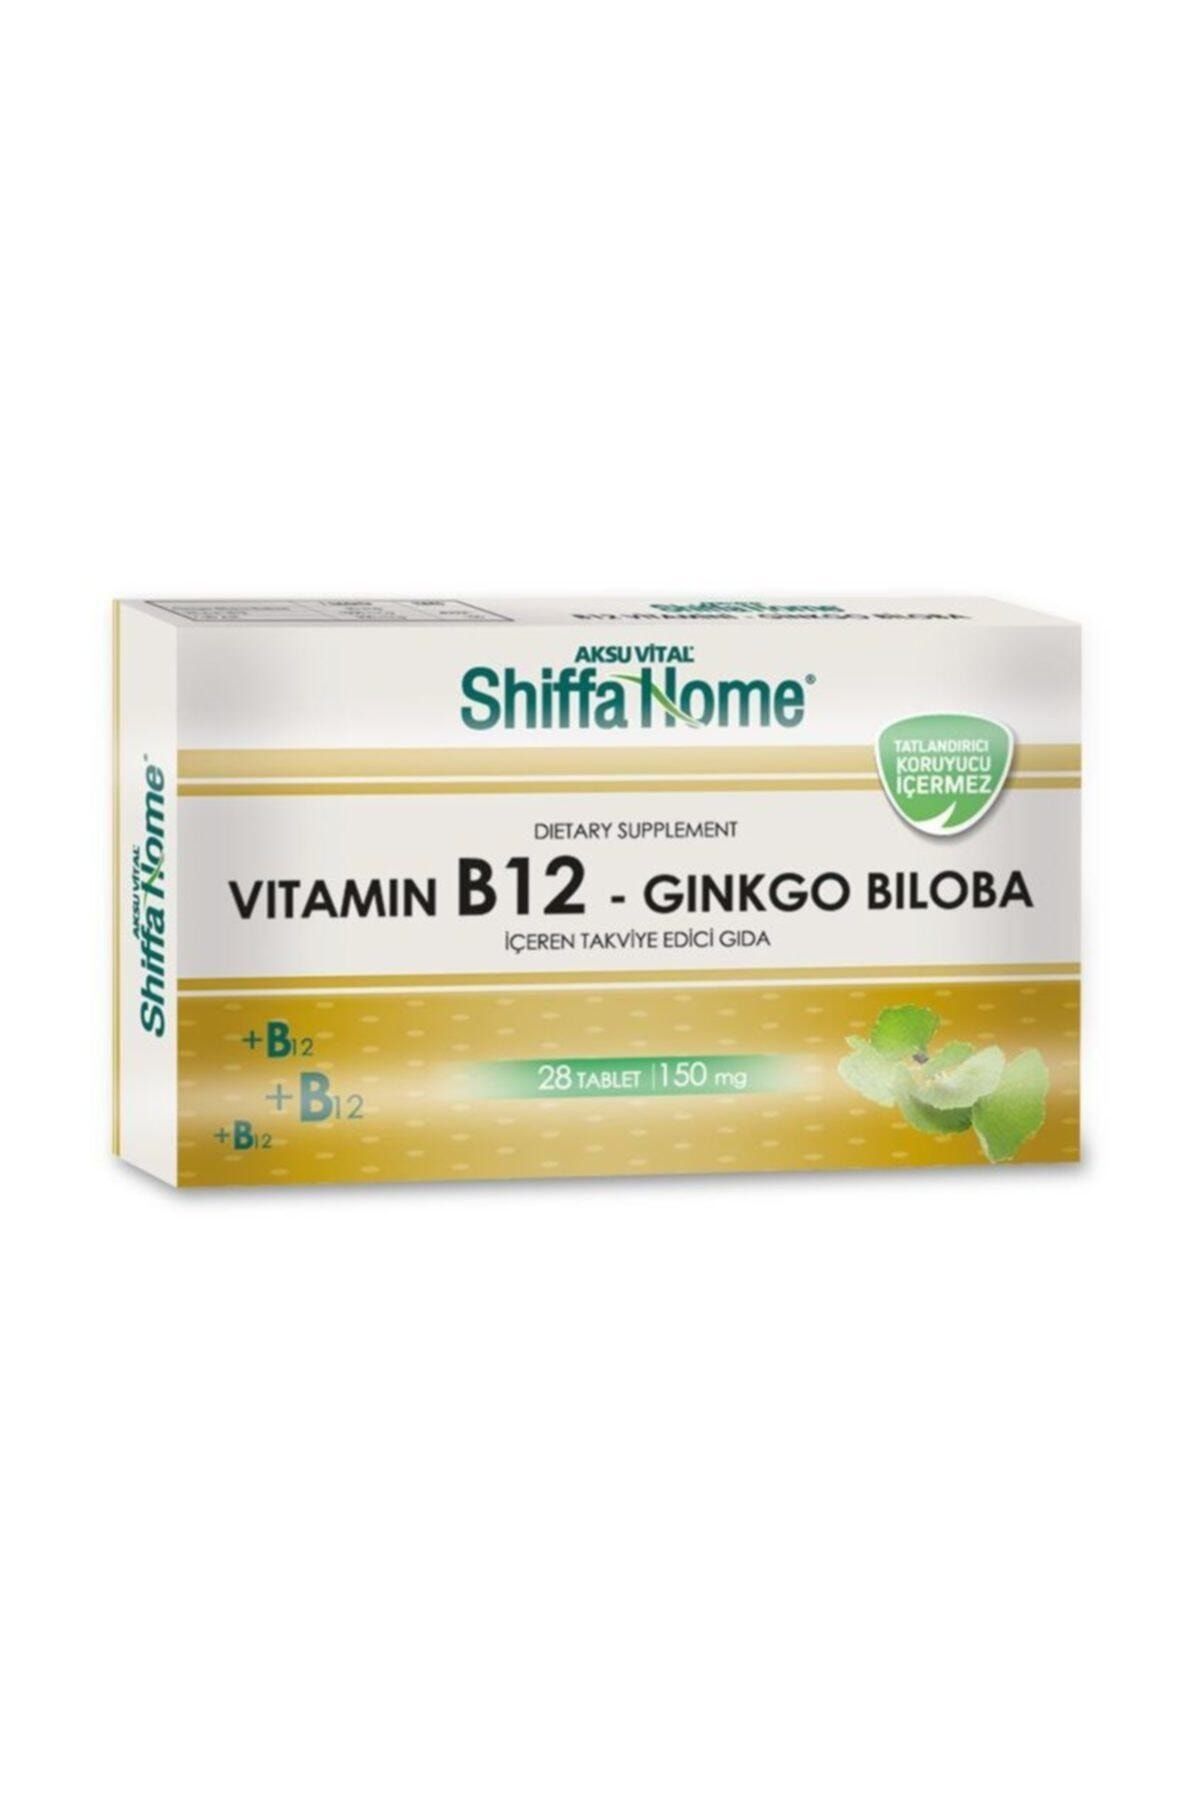 Shiffa Home Aksu Vital Vitamin B12 Ginko Biloba Tablet 150 mg 28 Tablet